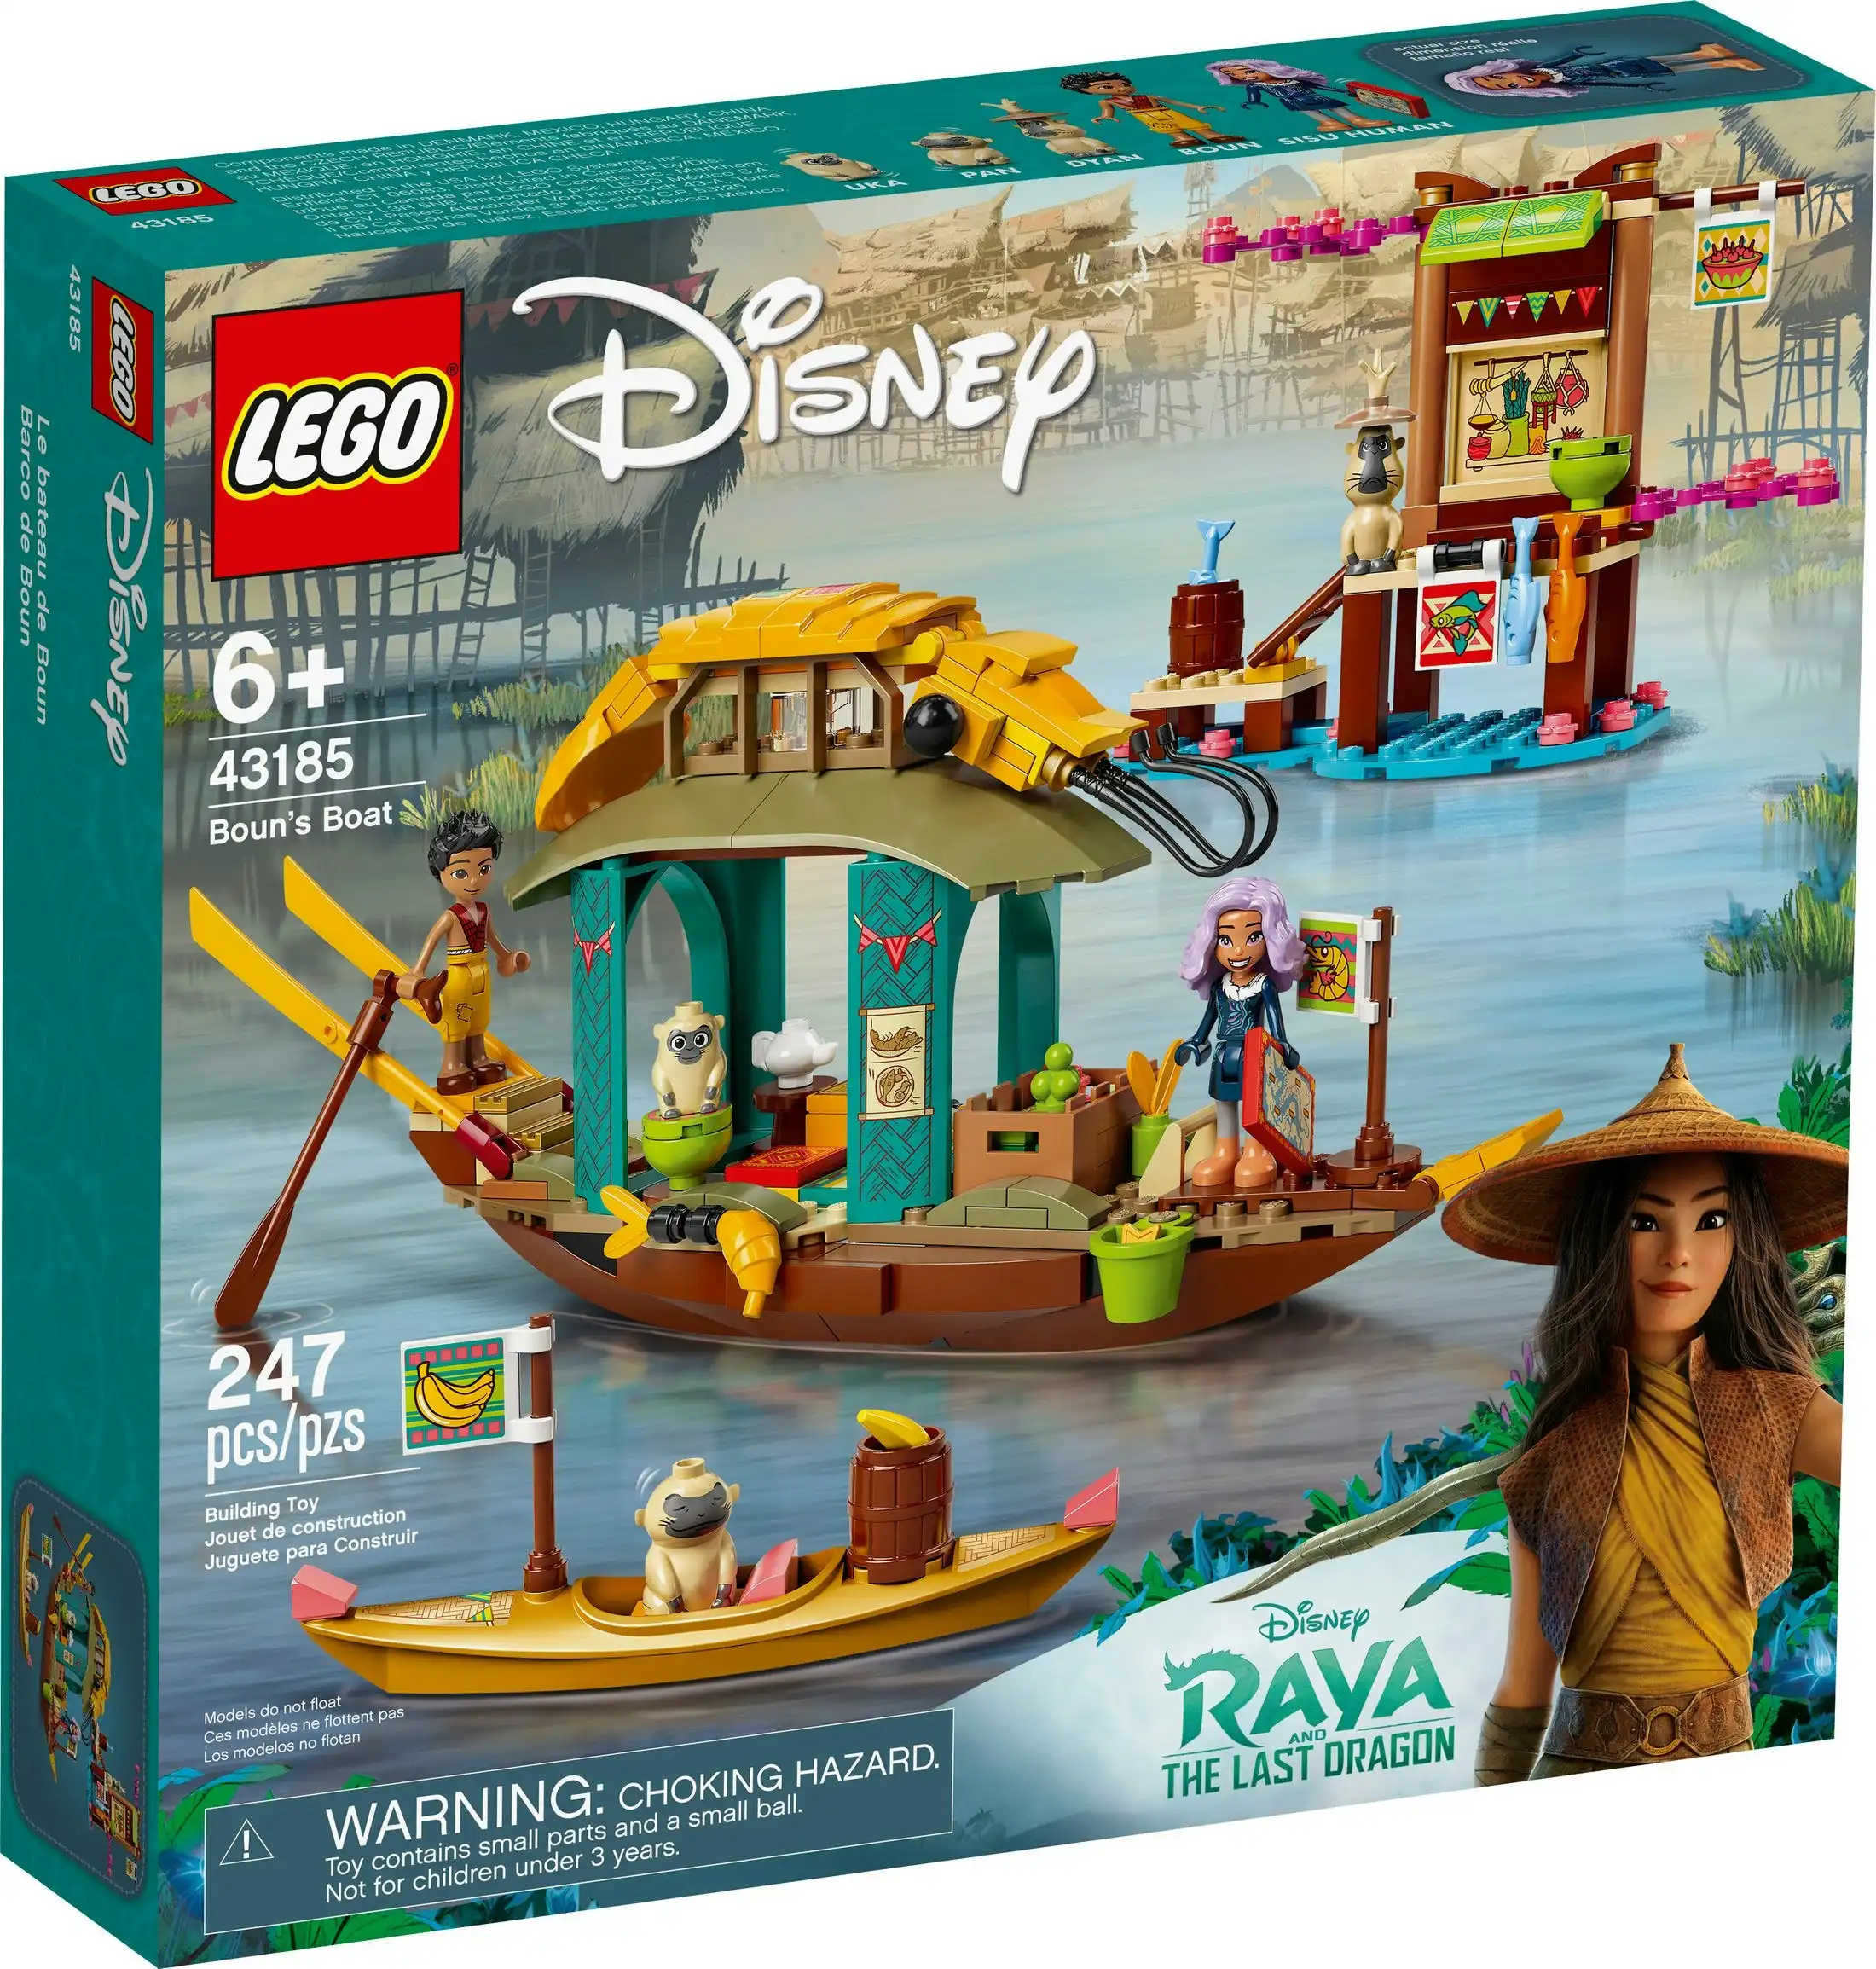 LEGO 43185 Boun's Boat - Disney Raya And The Last Dragon